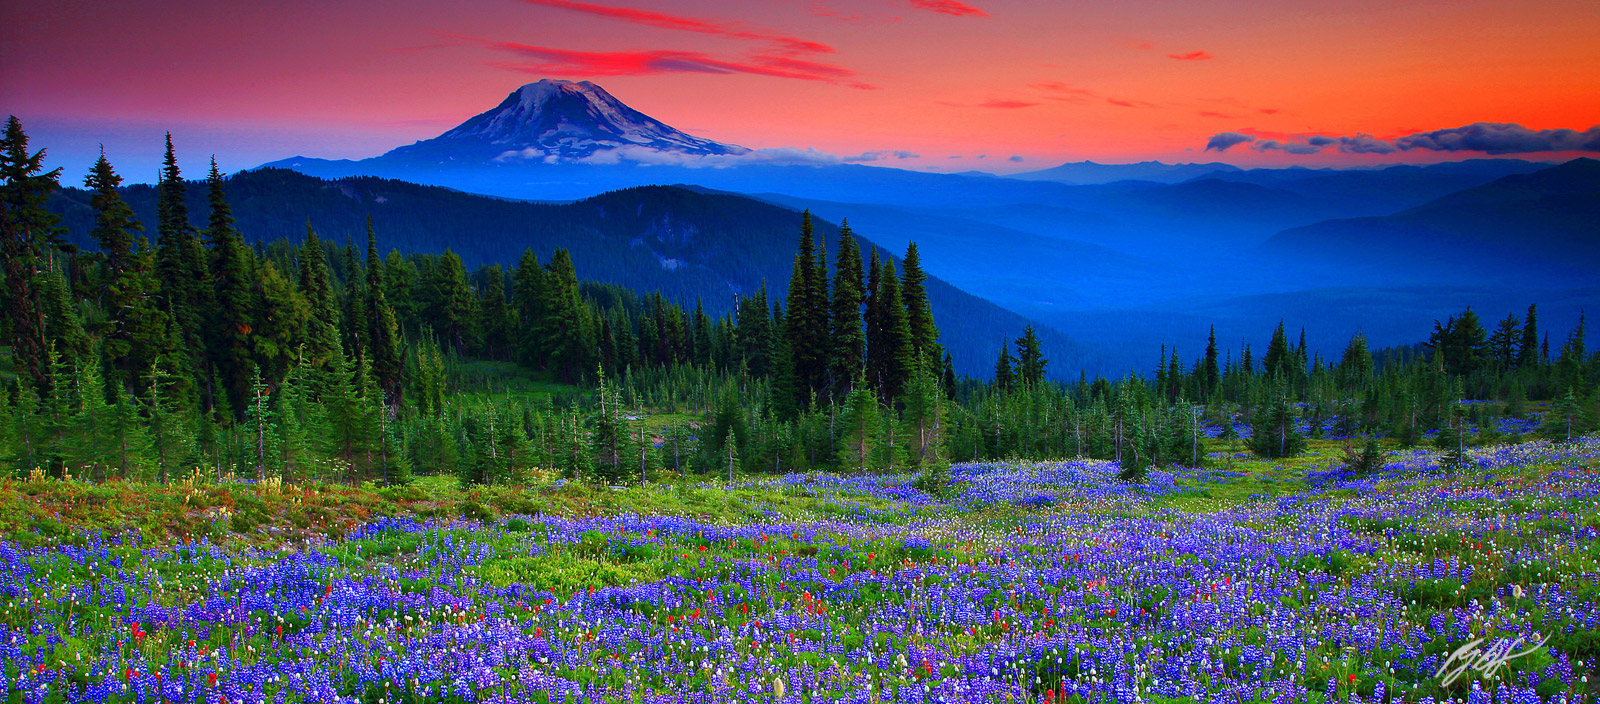 Sunset Wildflowers and Mt Adams from Snowgrass Flats, Goat Rocks Wilderness, Washington